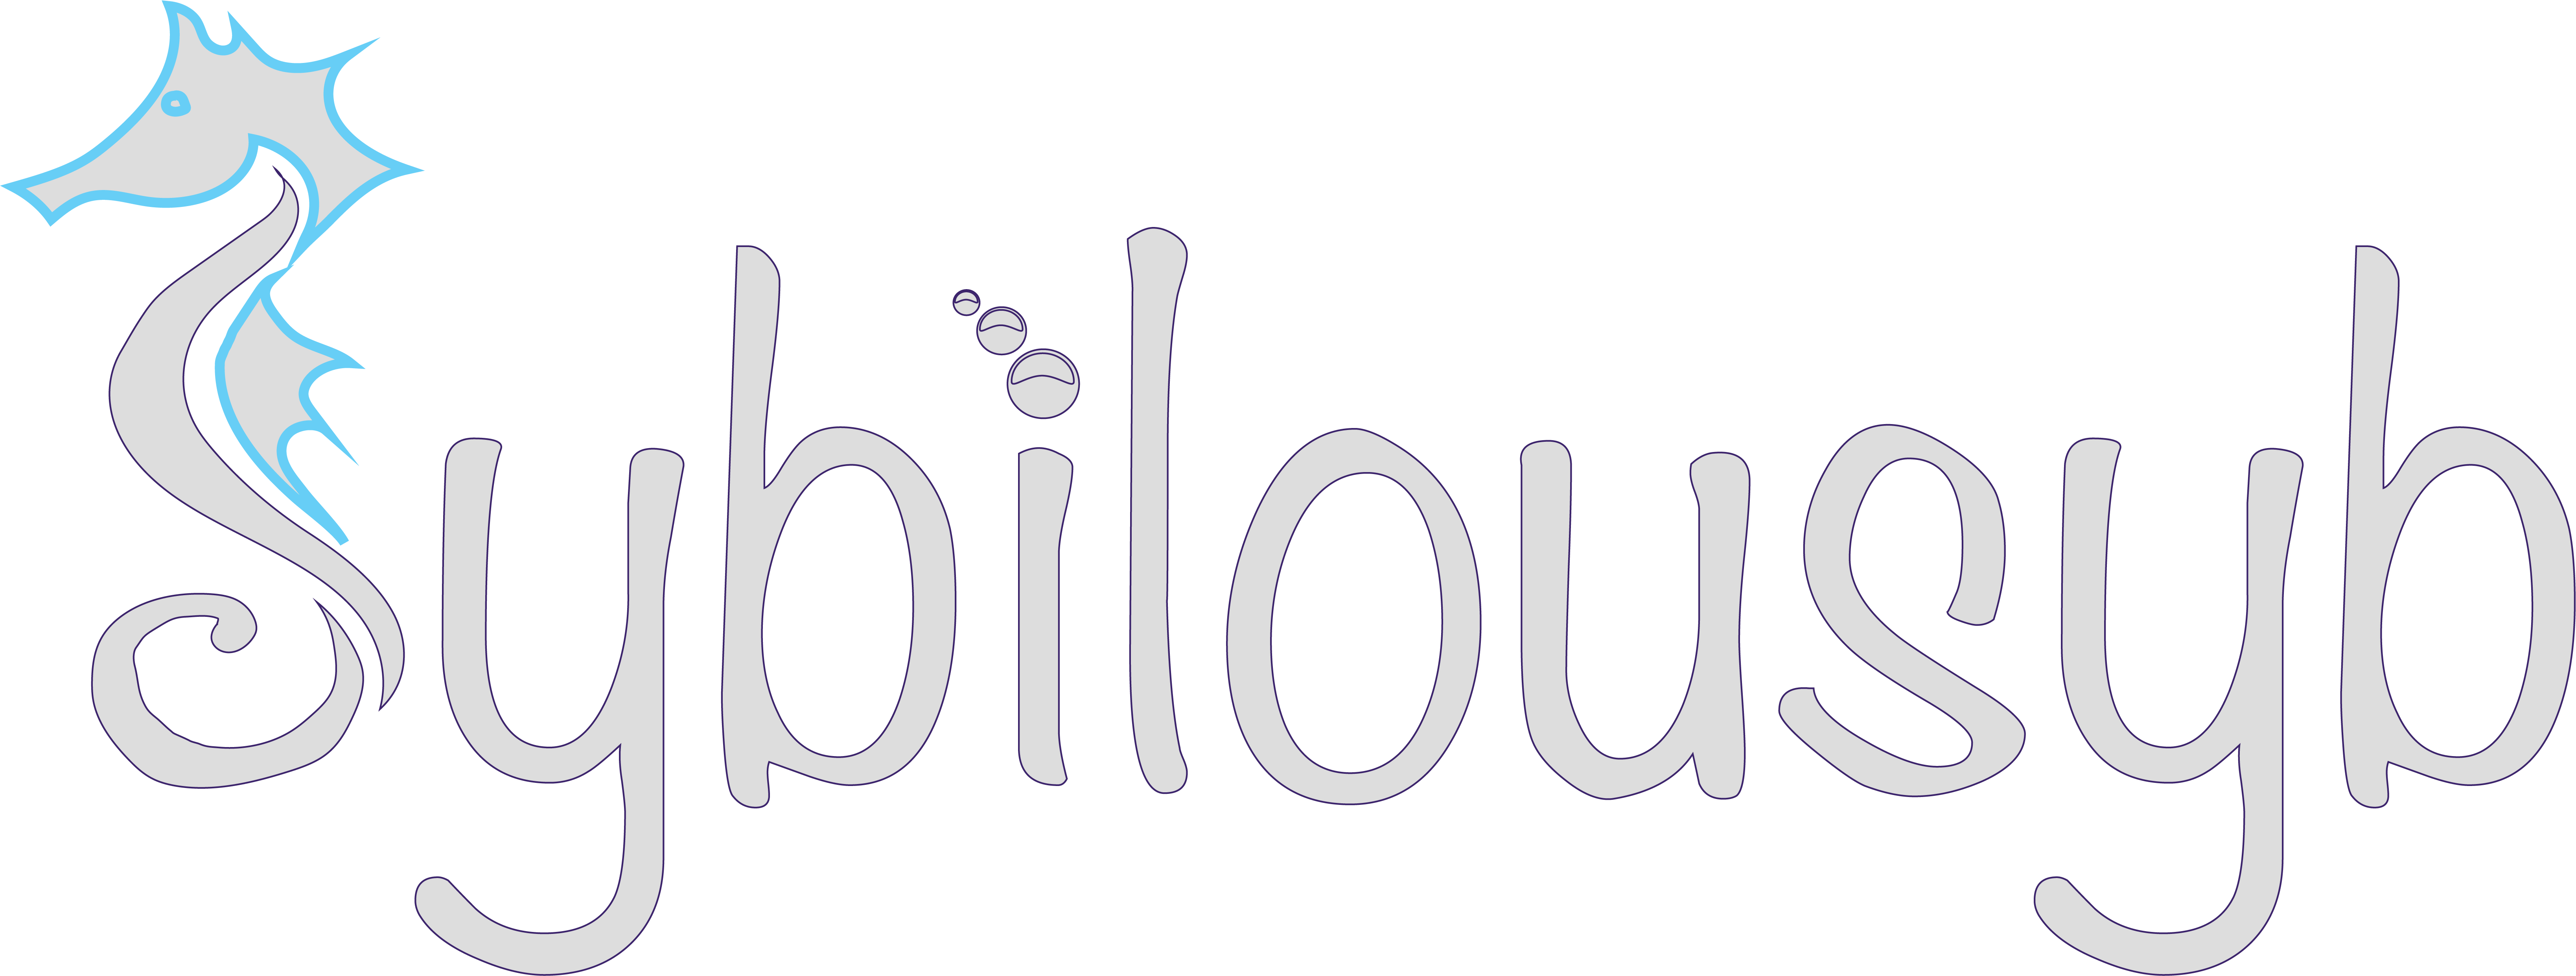 SybilouSyb logo inverted colors